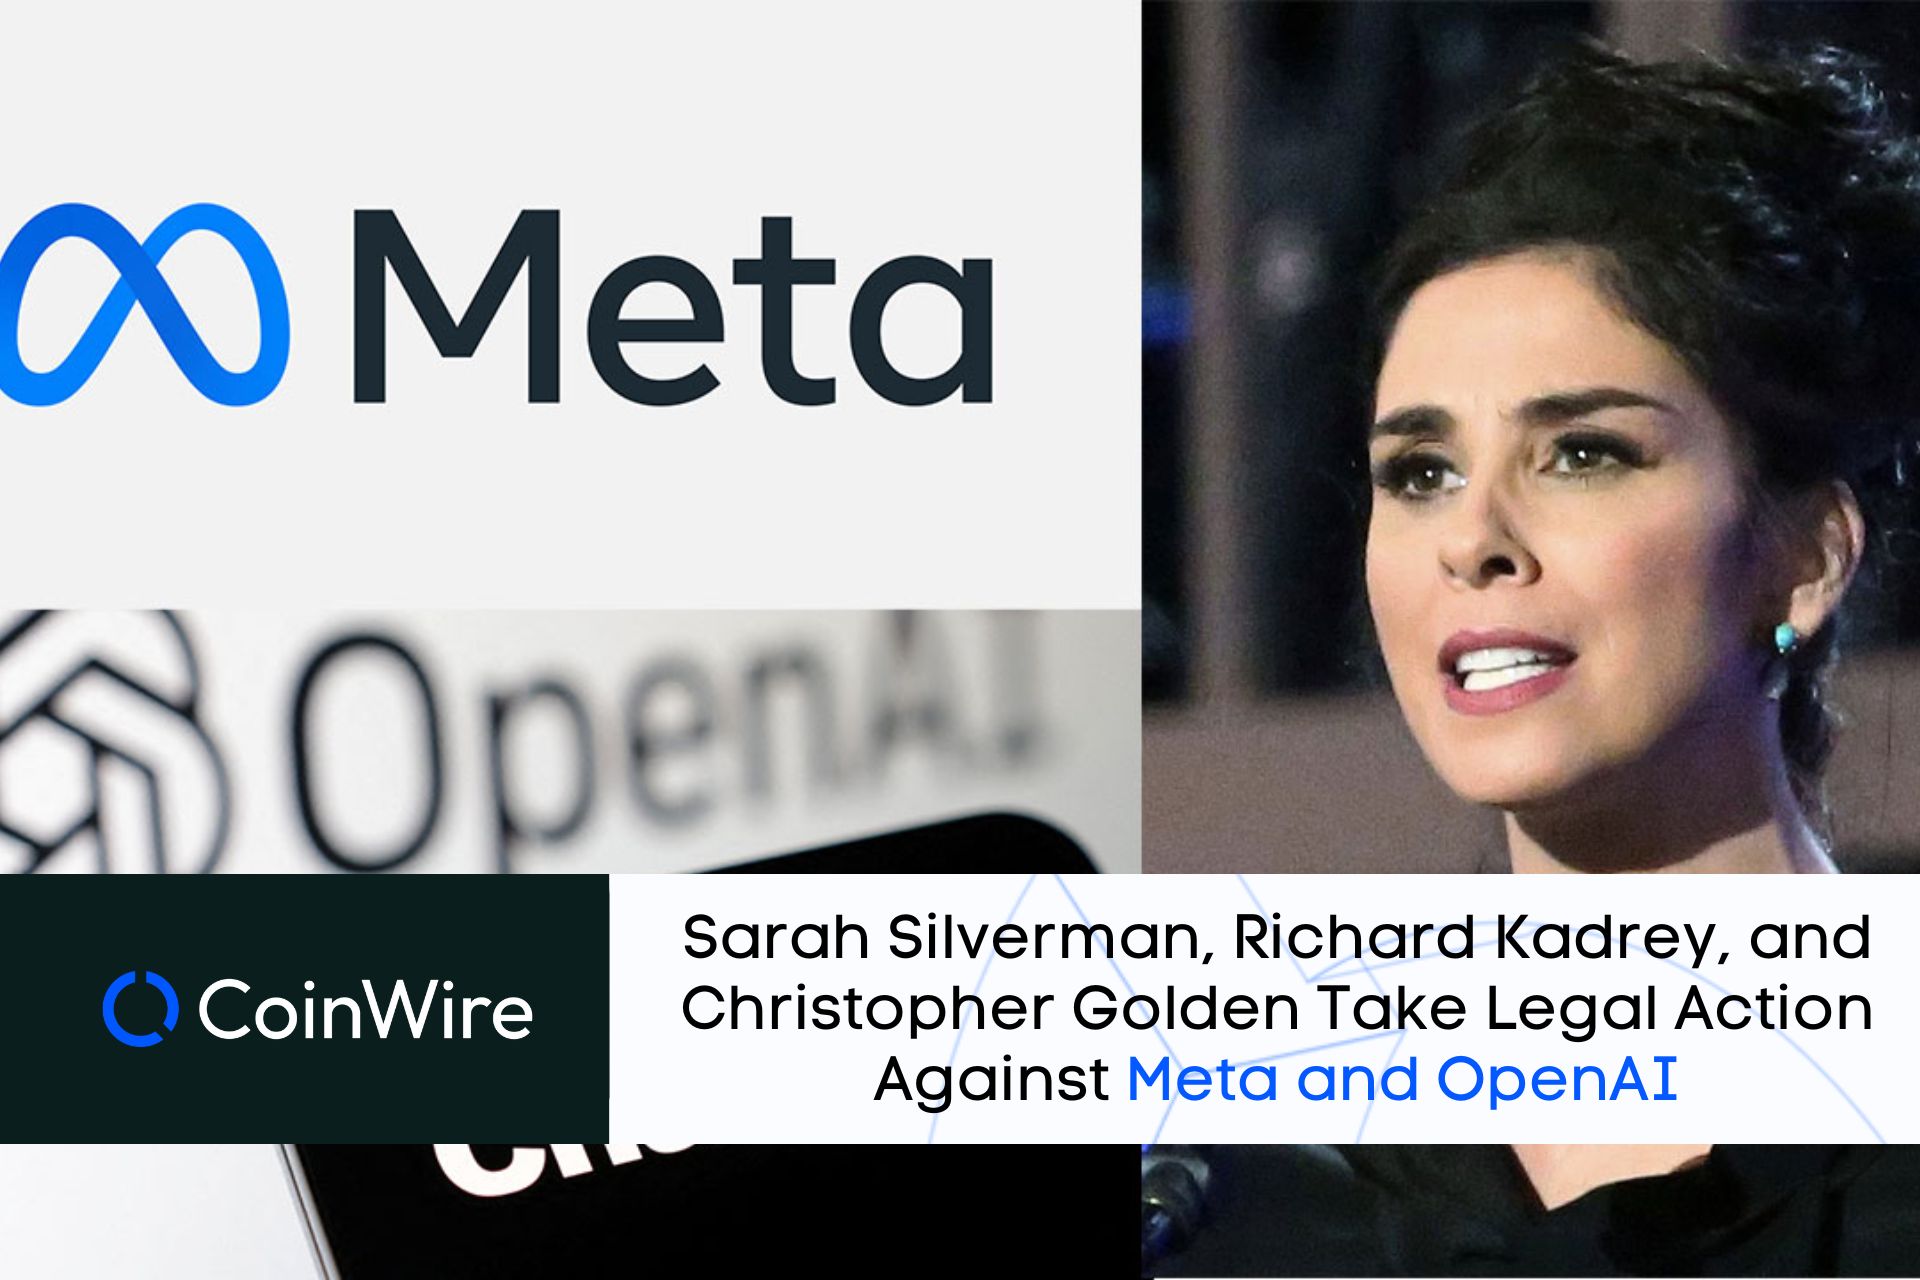 Sarah Silverman, Richard Kadrey, And Christopher Golden Take Legal Action Against Meta And Openai